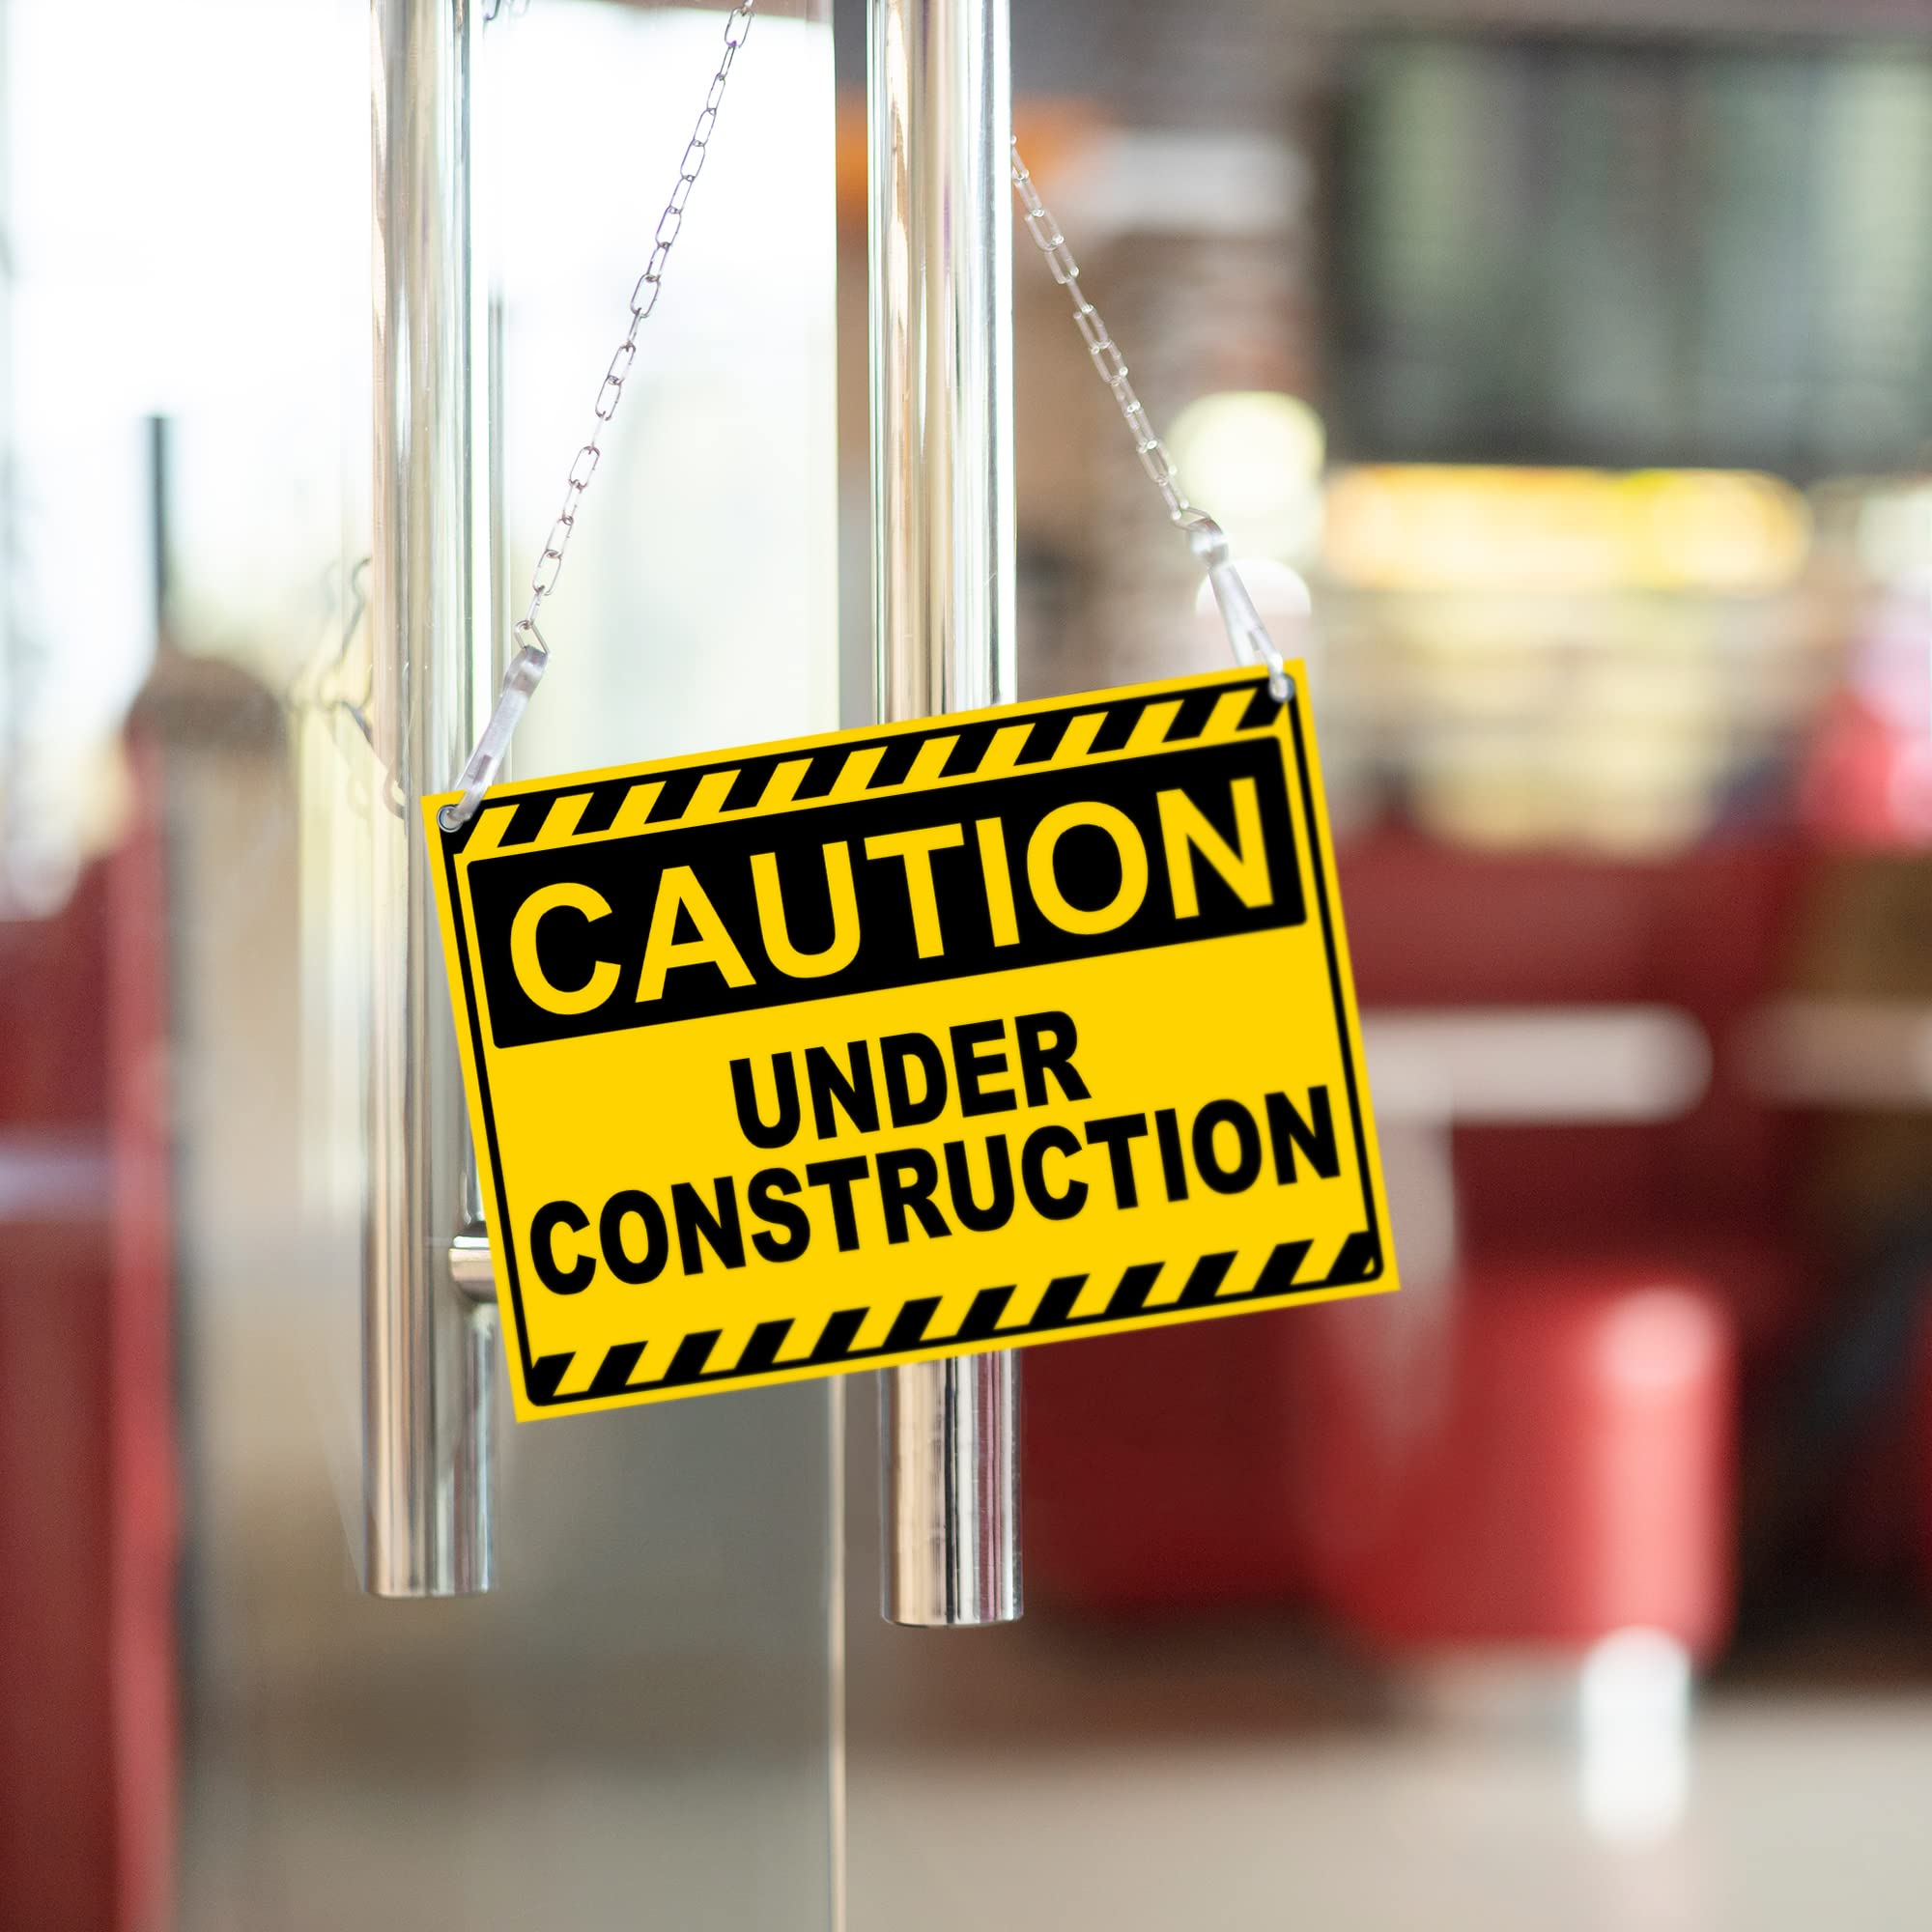 2 PC Under Construction Sign - 12 x 8 Coroplast Caution Area Under Construction Signs with Grommets - Work Zone Signs Caution Construction Zone Sign